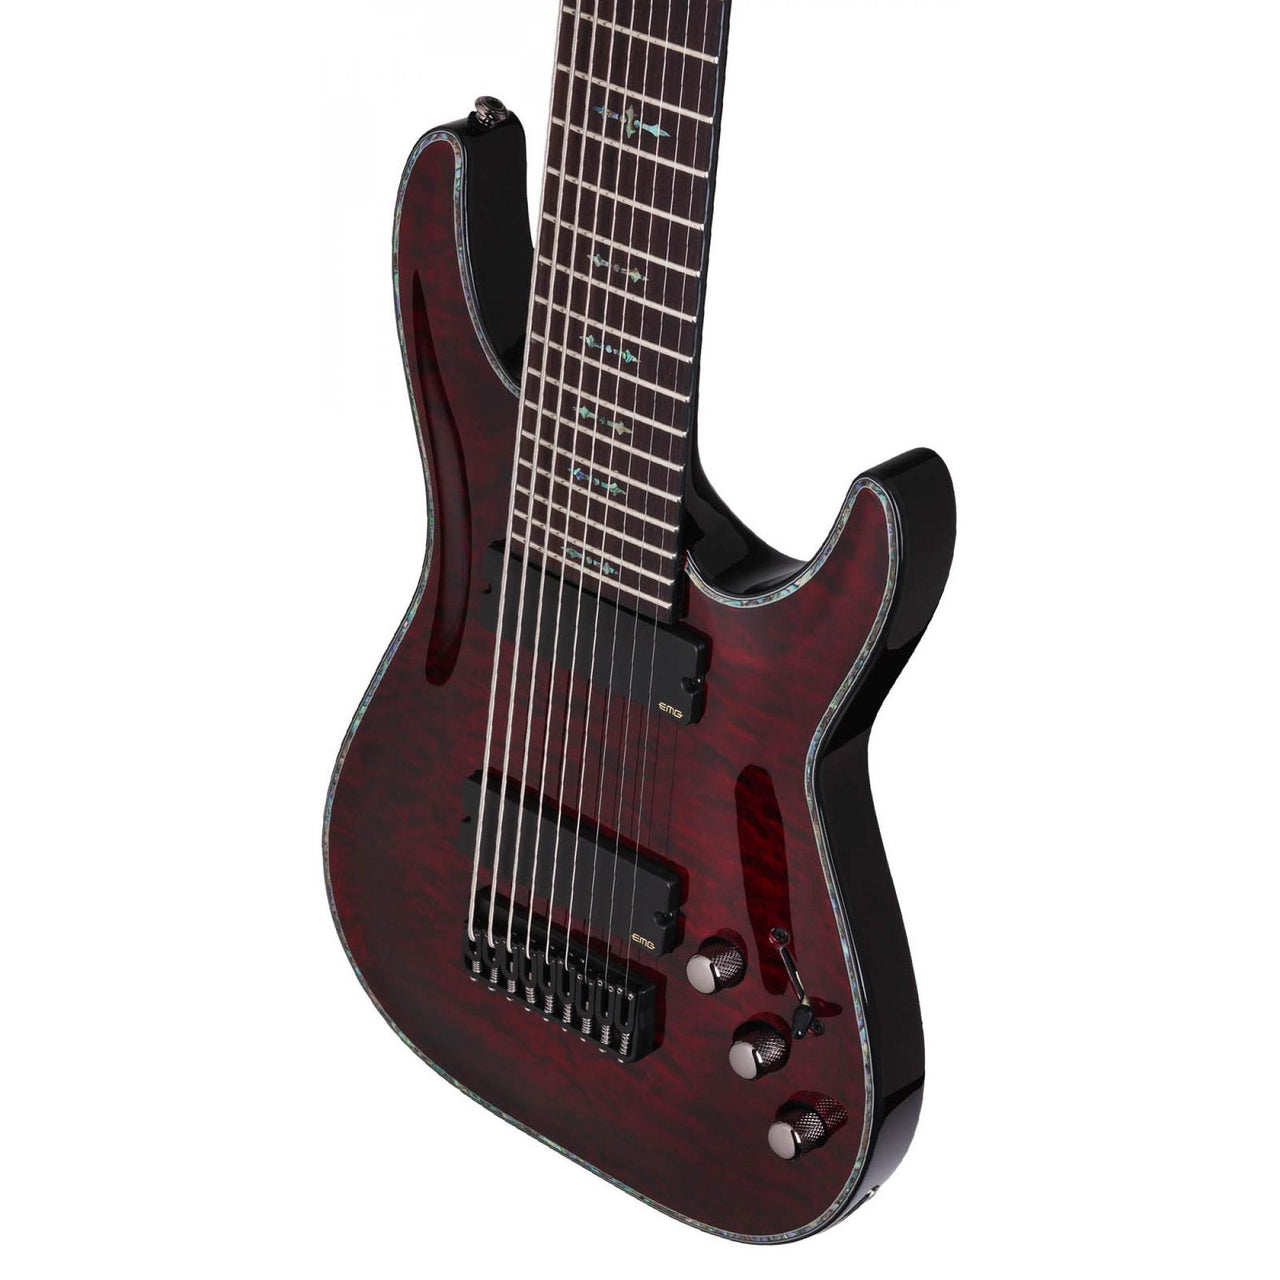 Guitarra Schecter Hellraiser C-9 Electrica de 9 cuerdas